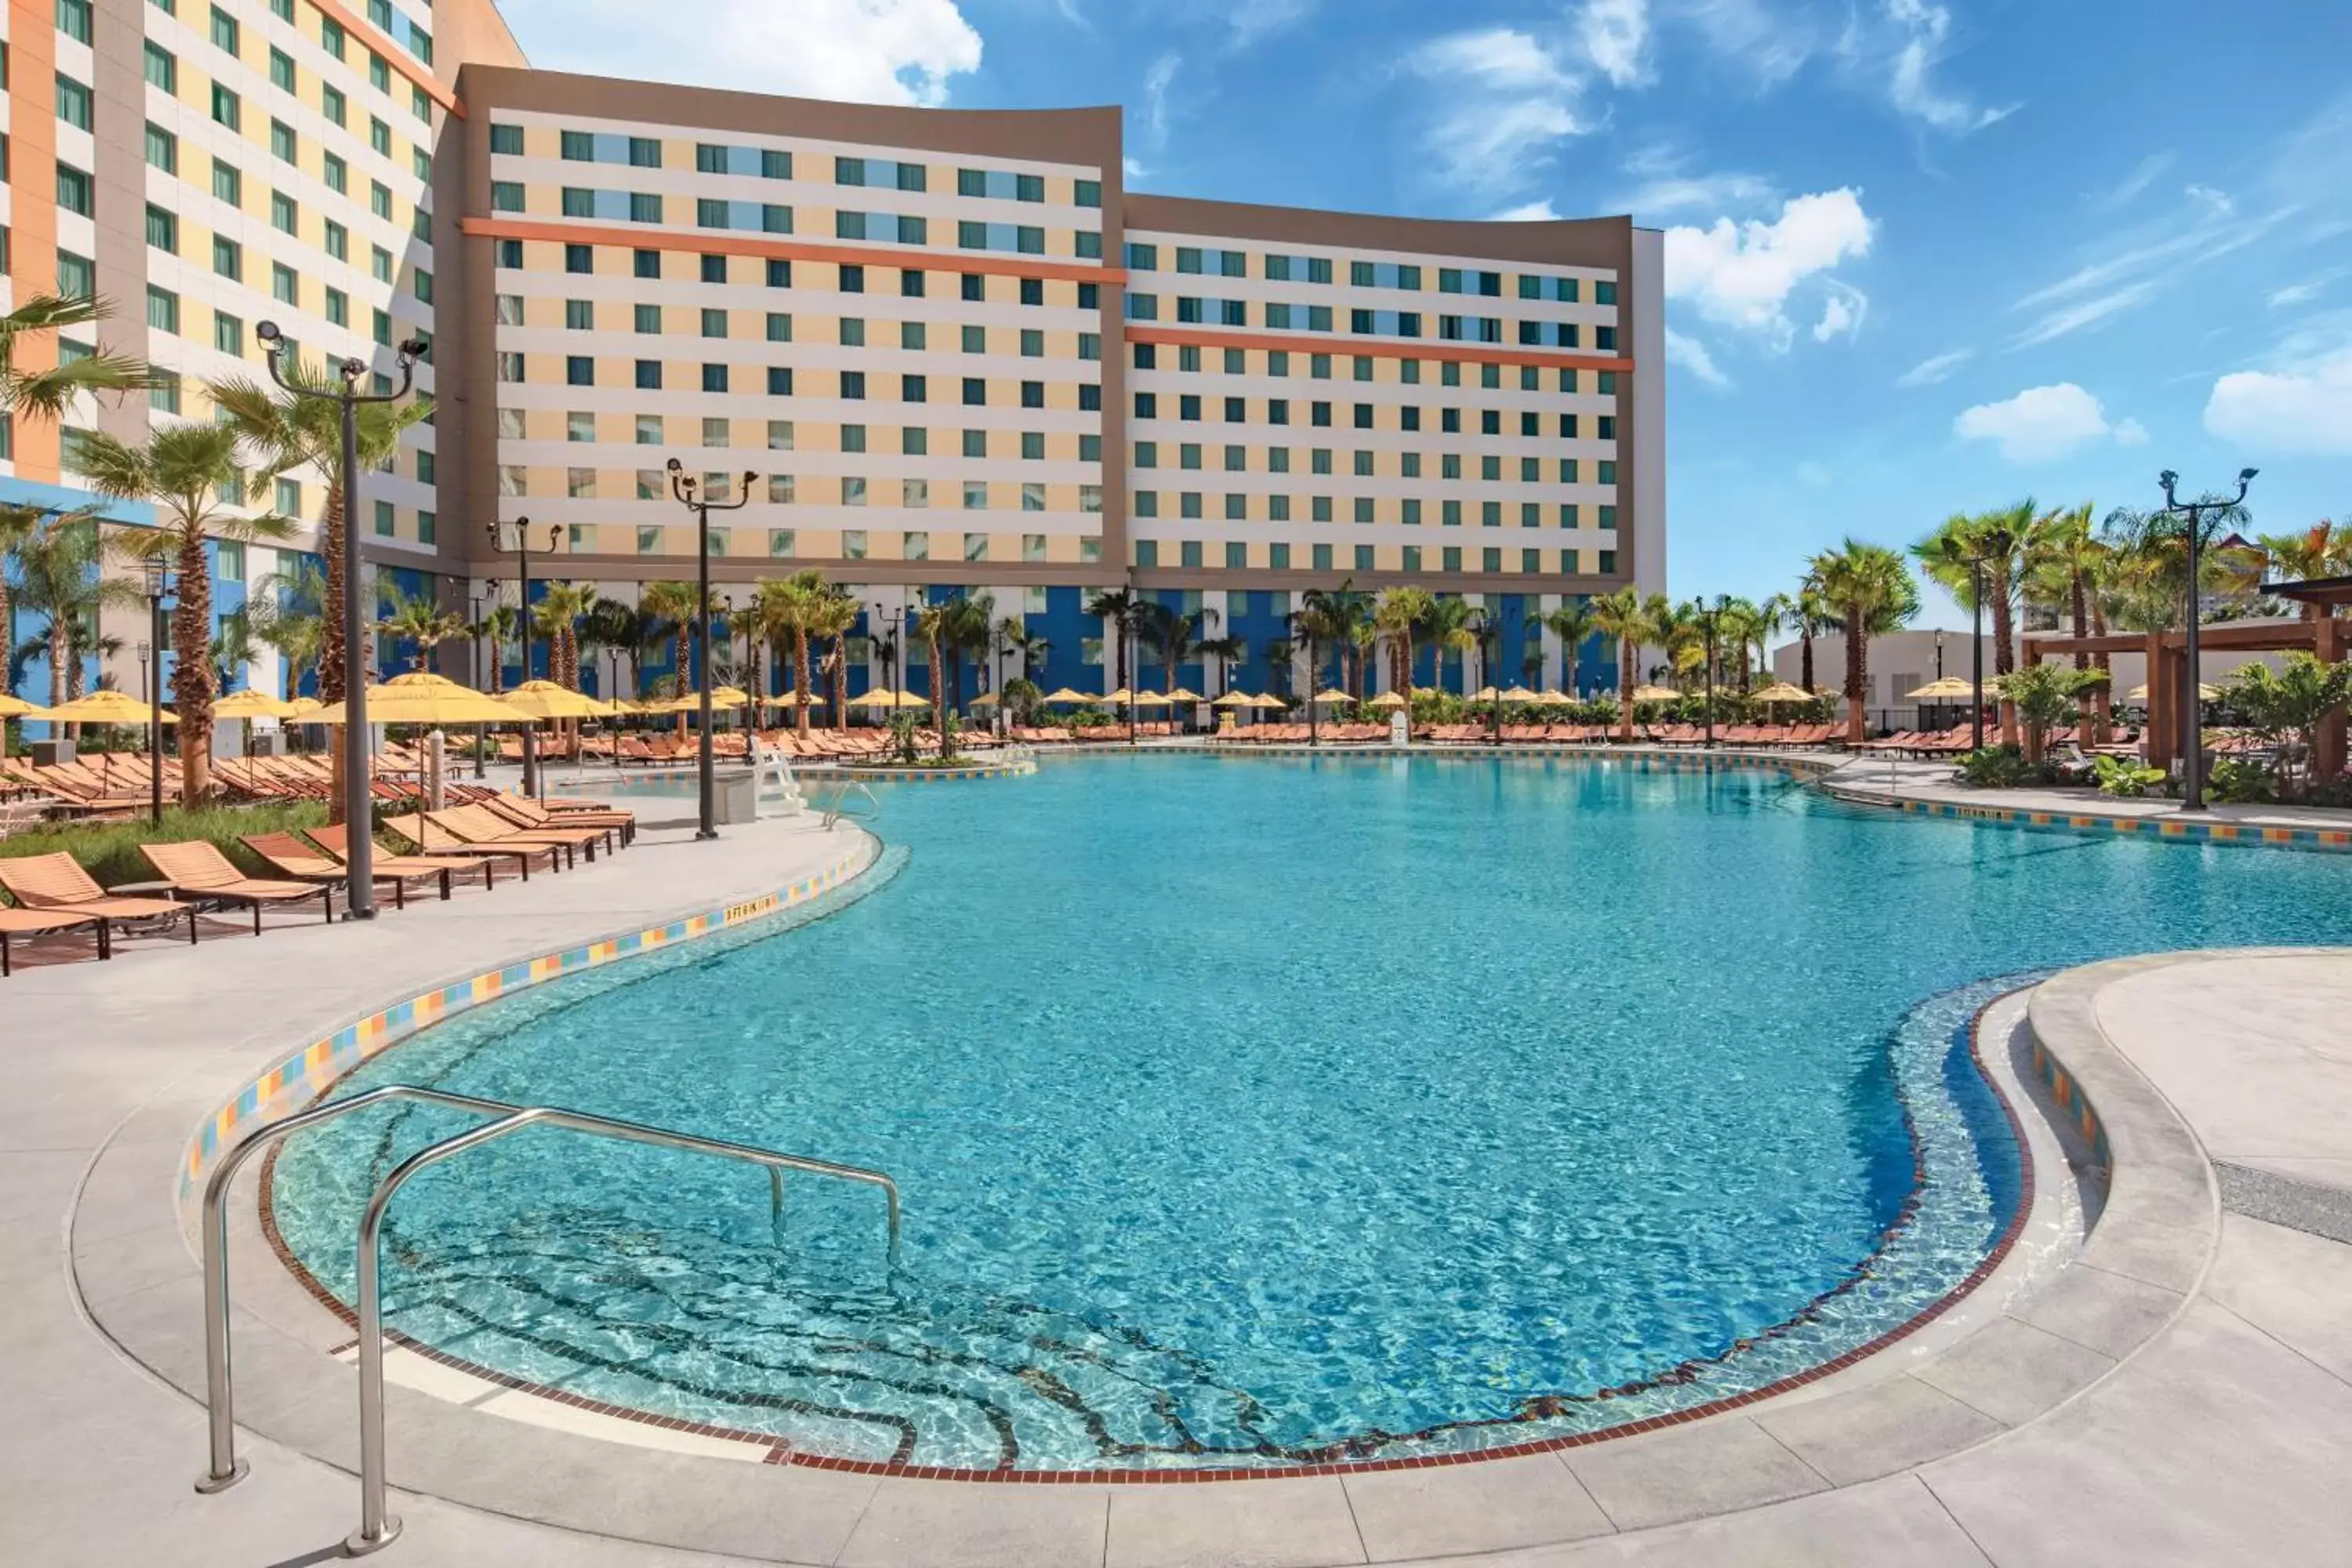 Swimming pool in Universal’s Endless Summer Resort – Dockside Inn and Suites